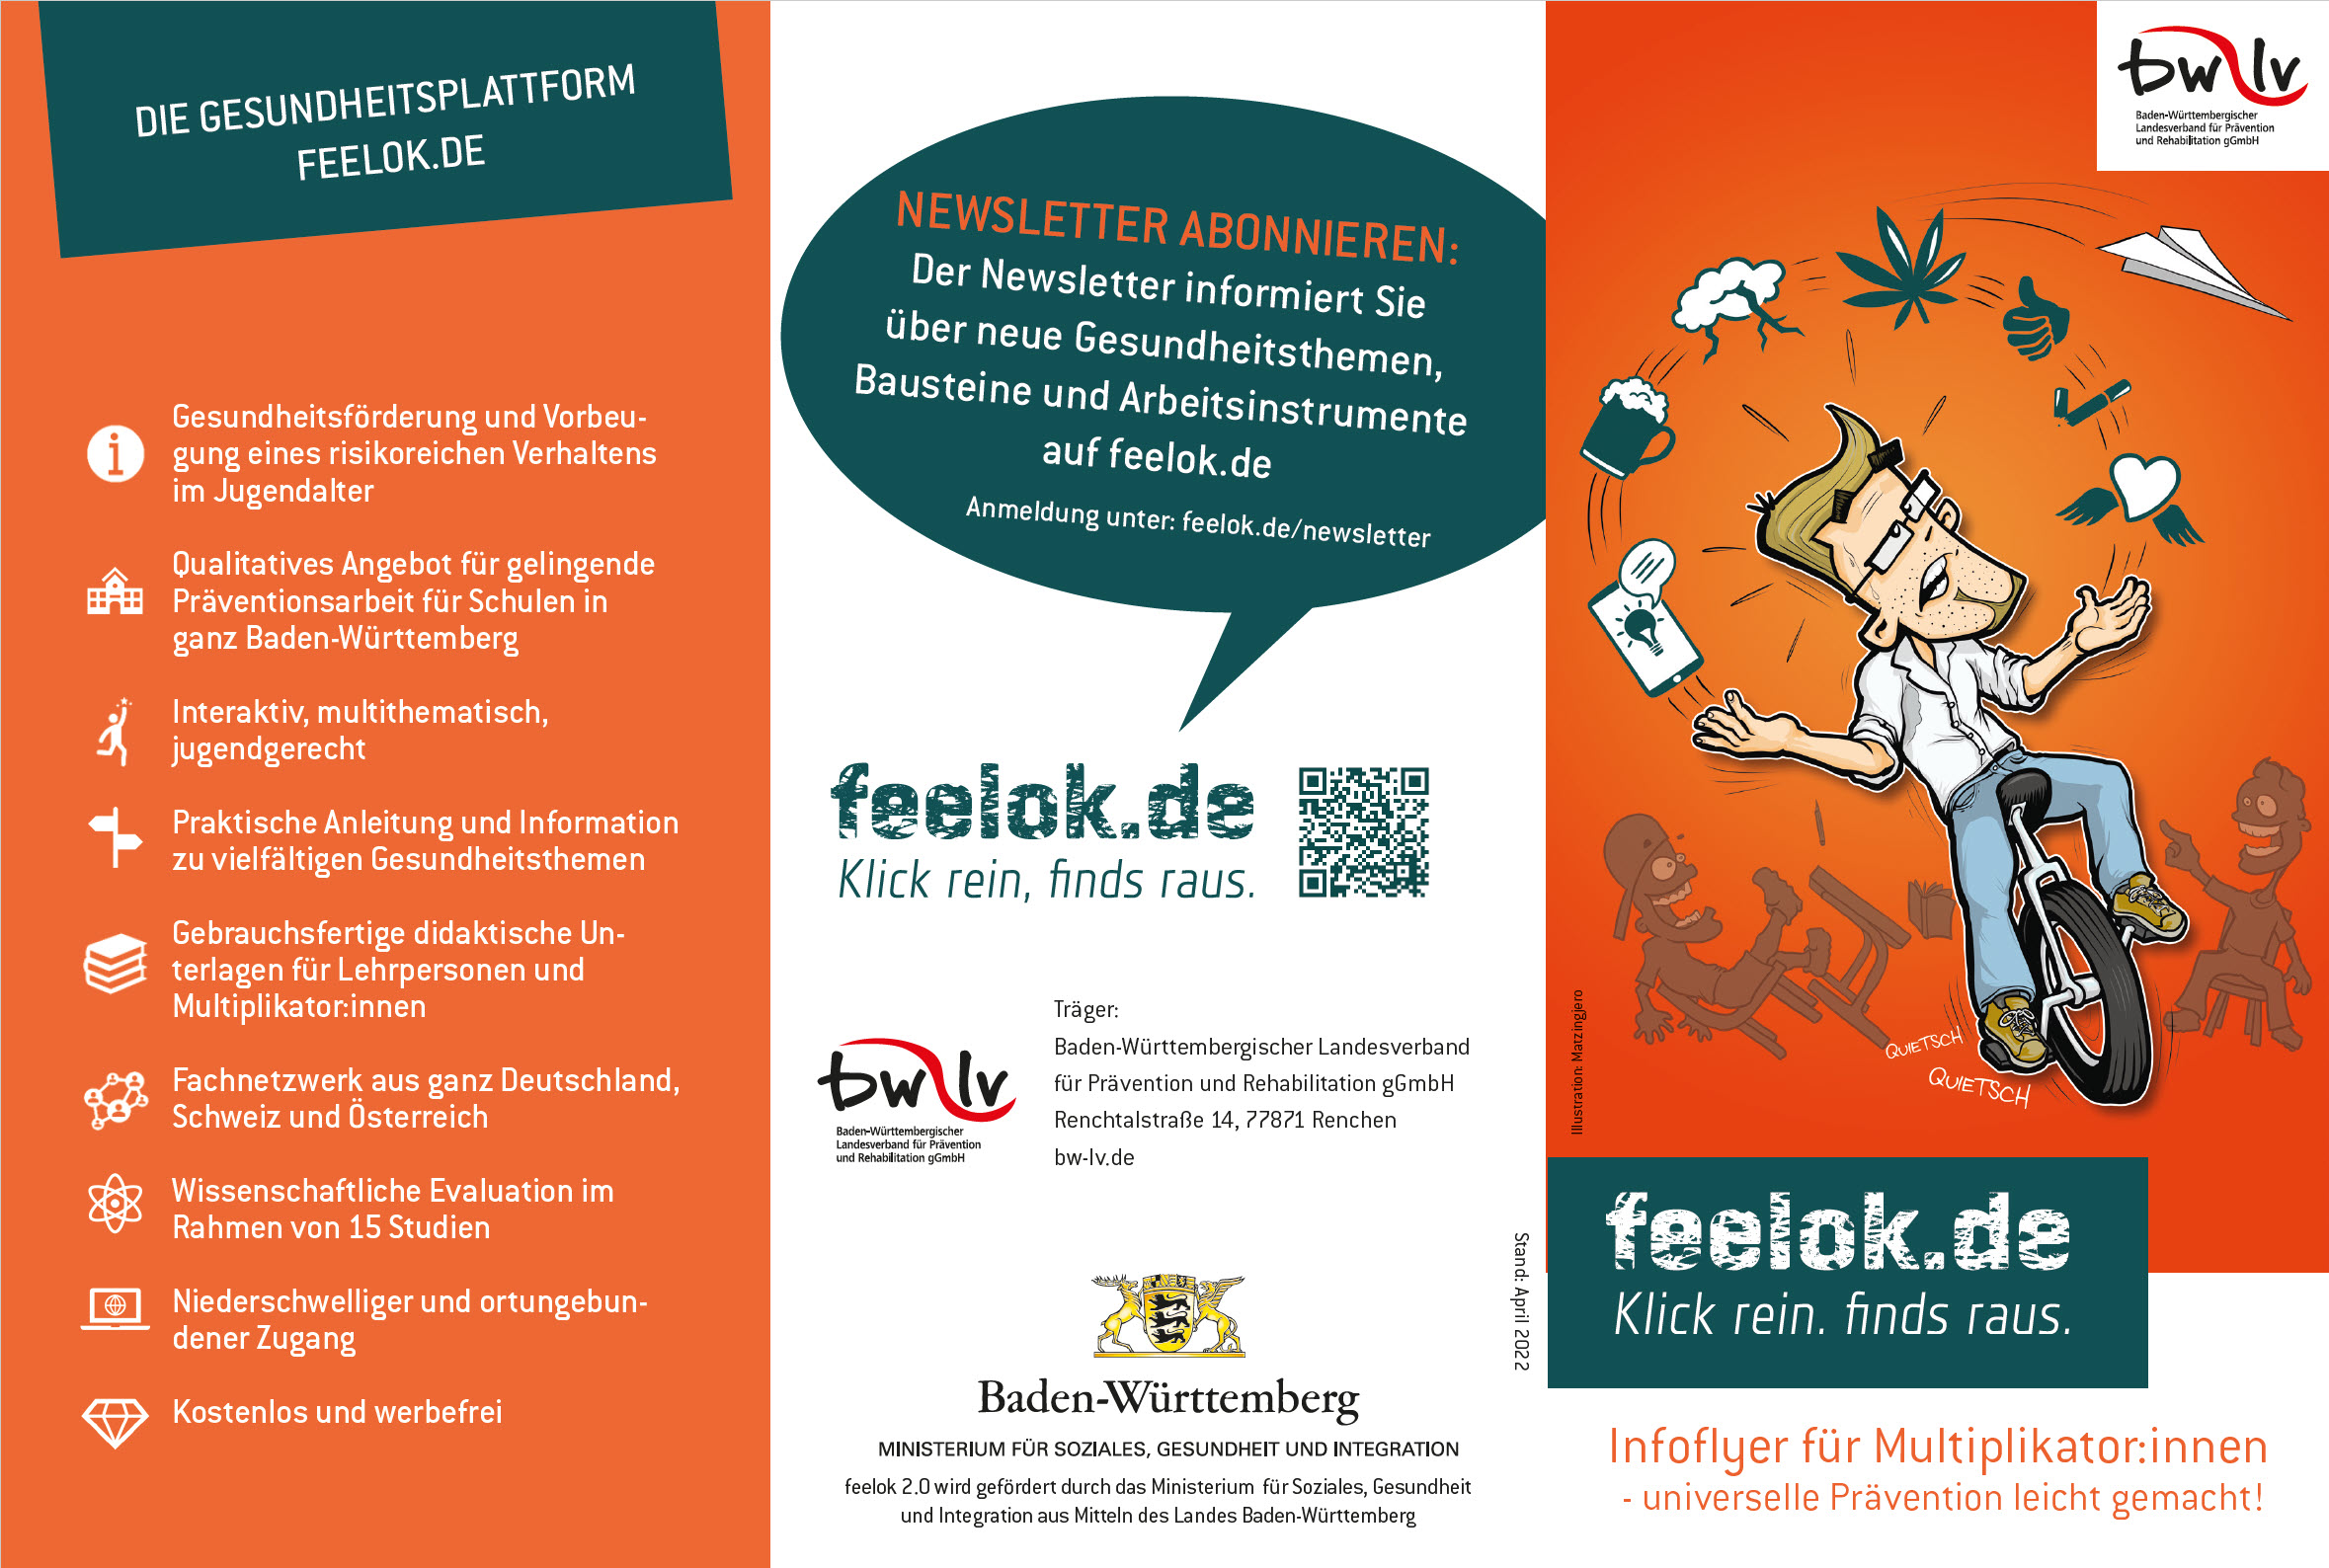 Flyer feelok.de für Multiplikatoren:innen